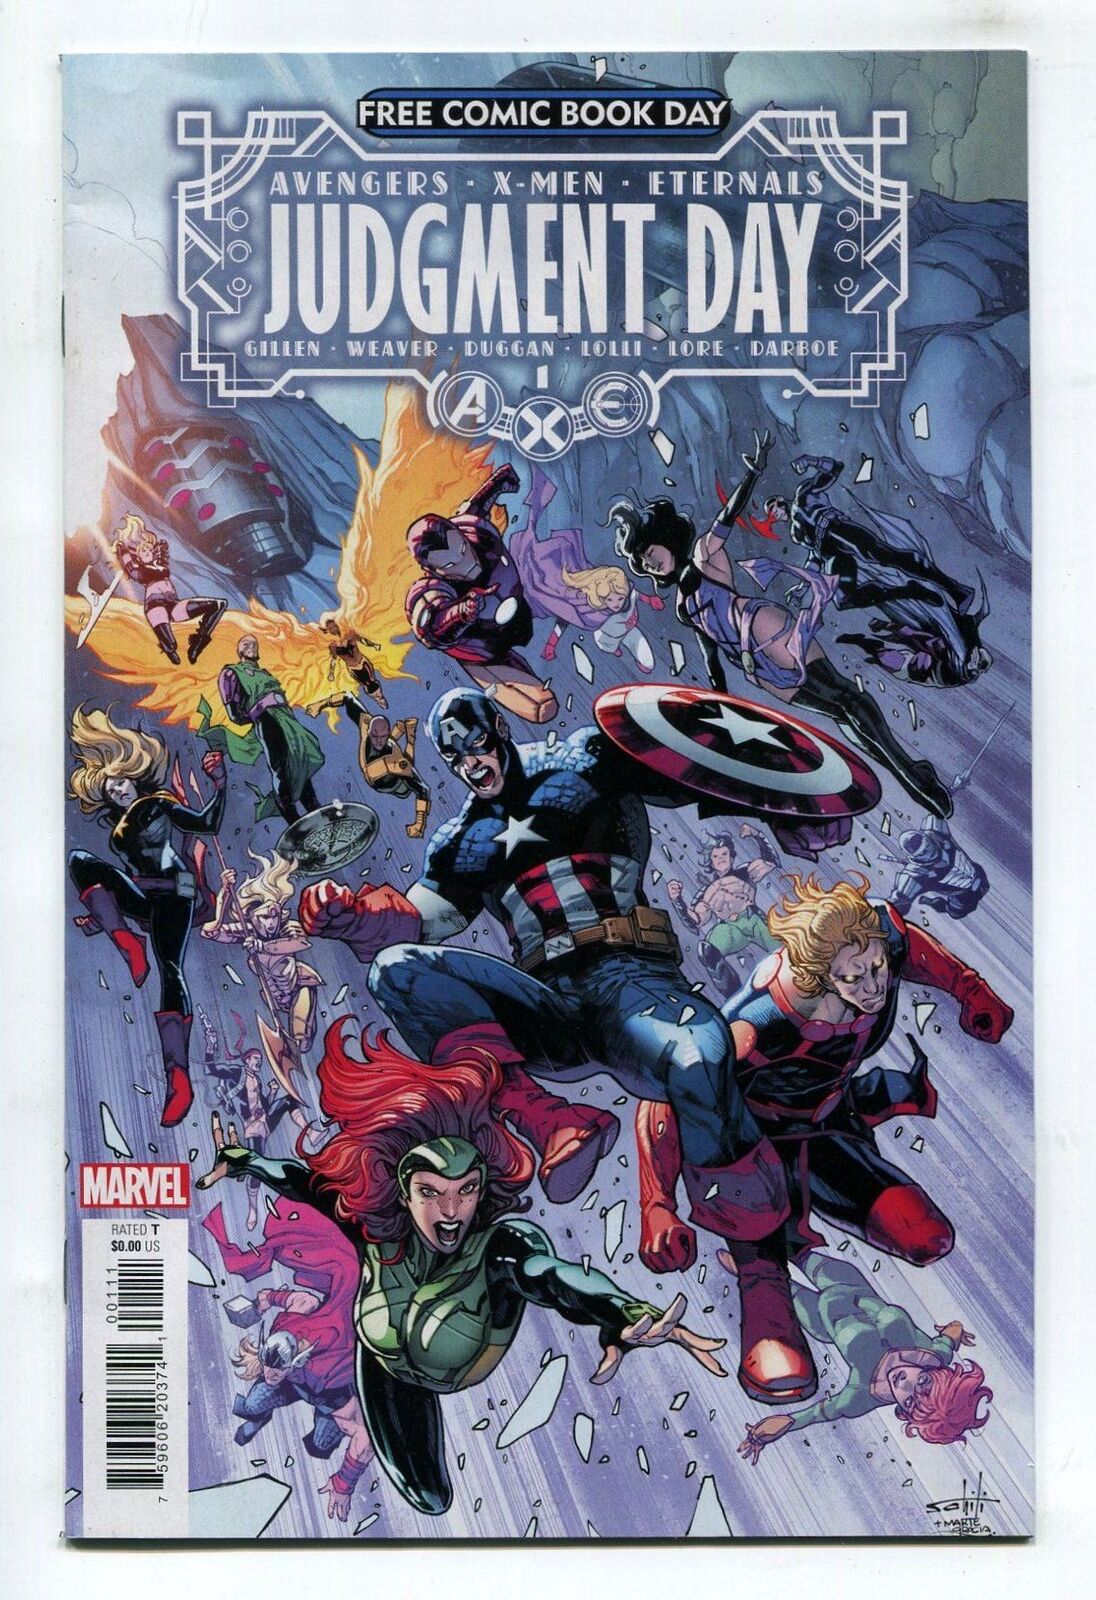 FCBD Avengers/X-Men Judgment Day #1 1st Appearance Bloodline Daughter of Blade